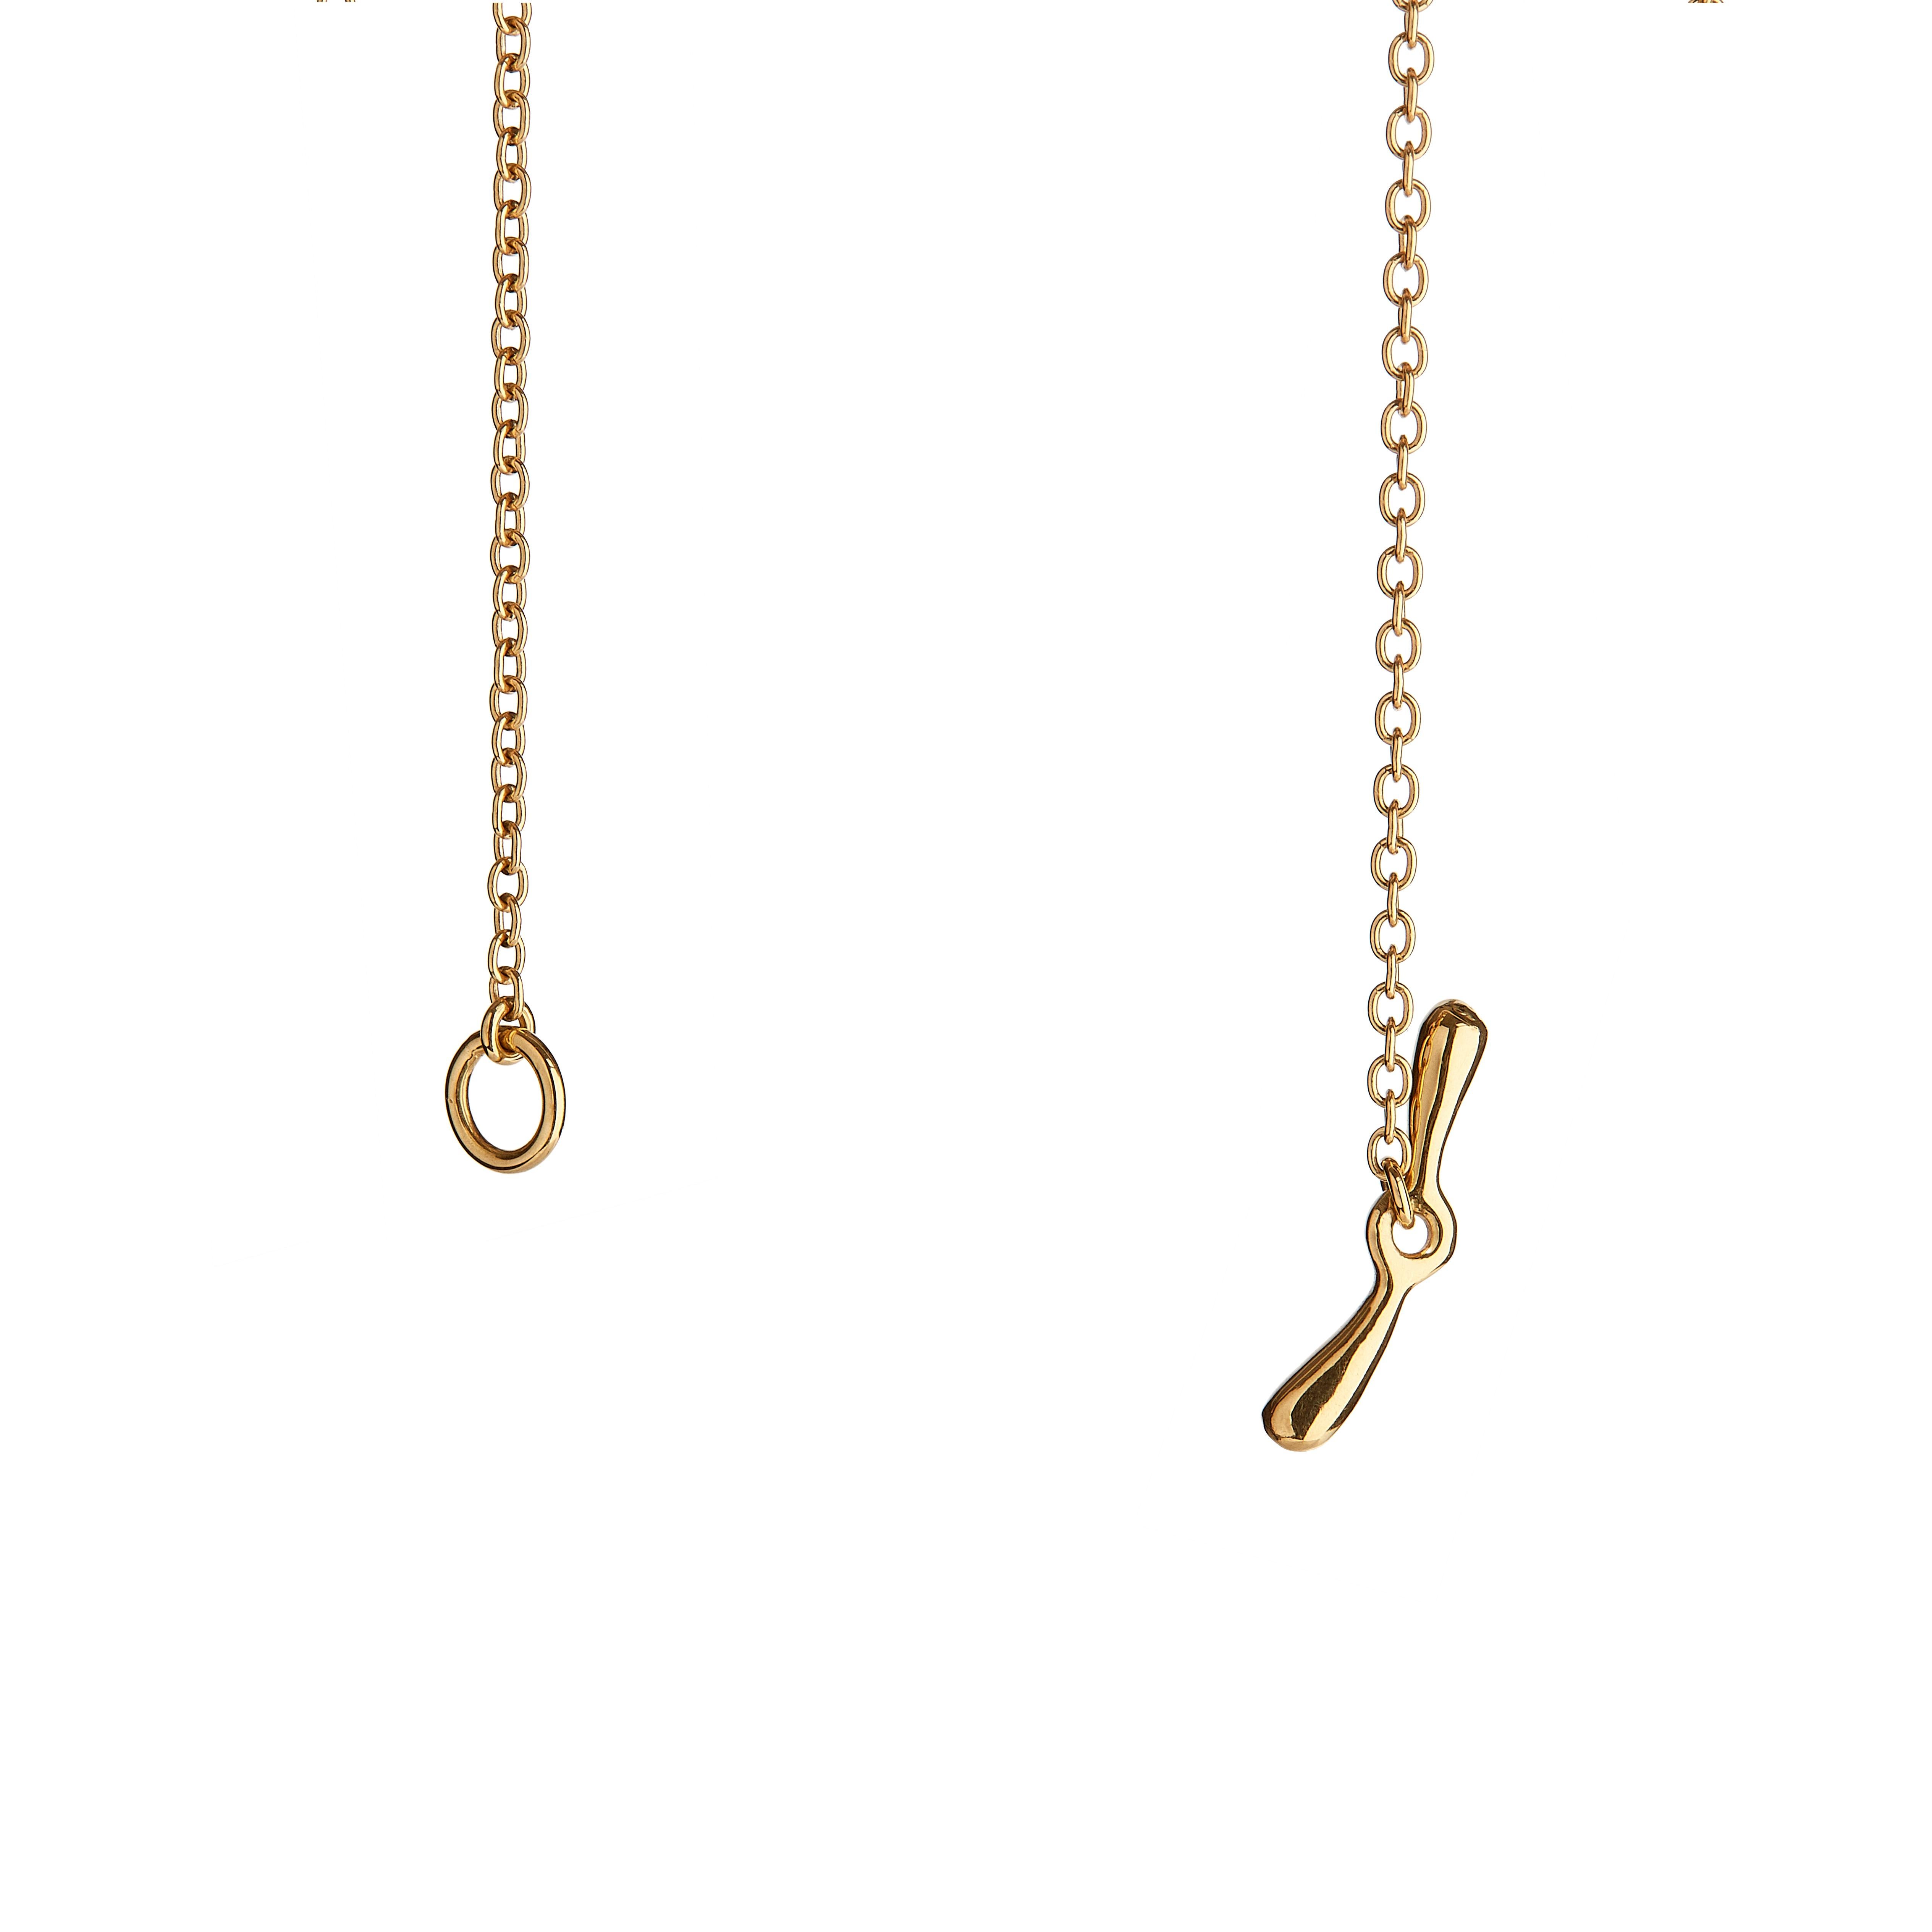 Nathalie Jean Contemporary Diamond Tourmaline Amethyst Gold Pendant Necklace For Sale 8